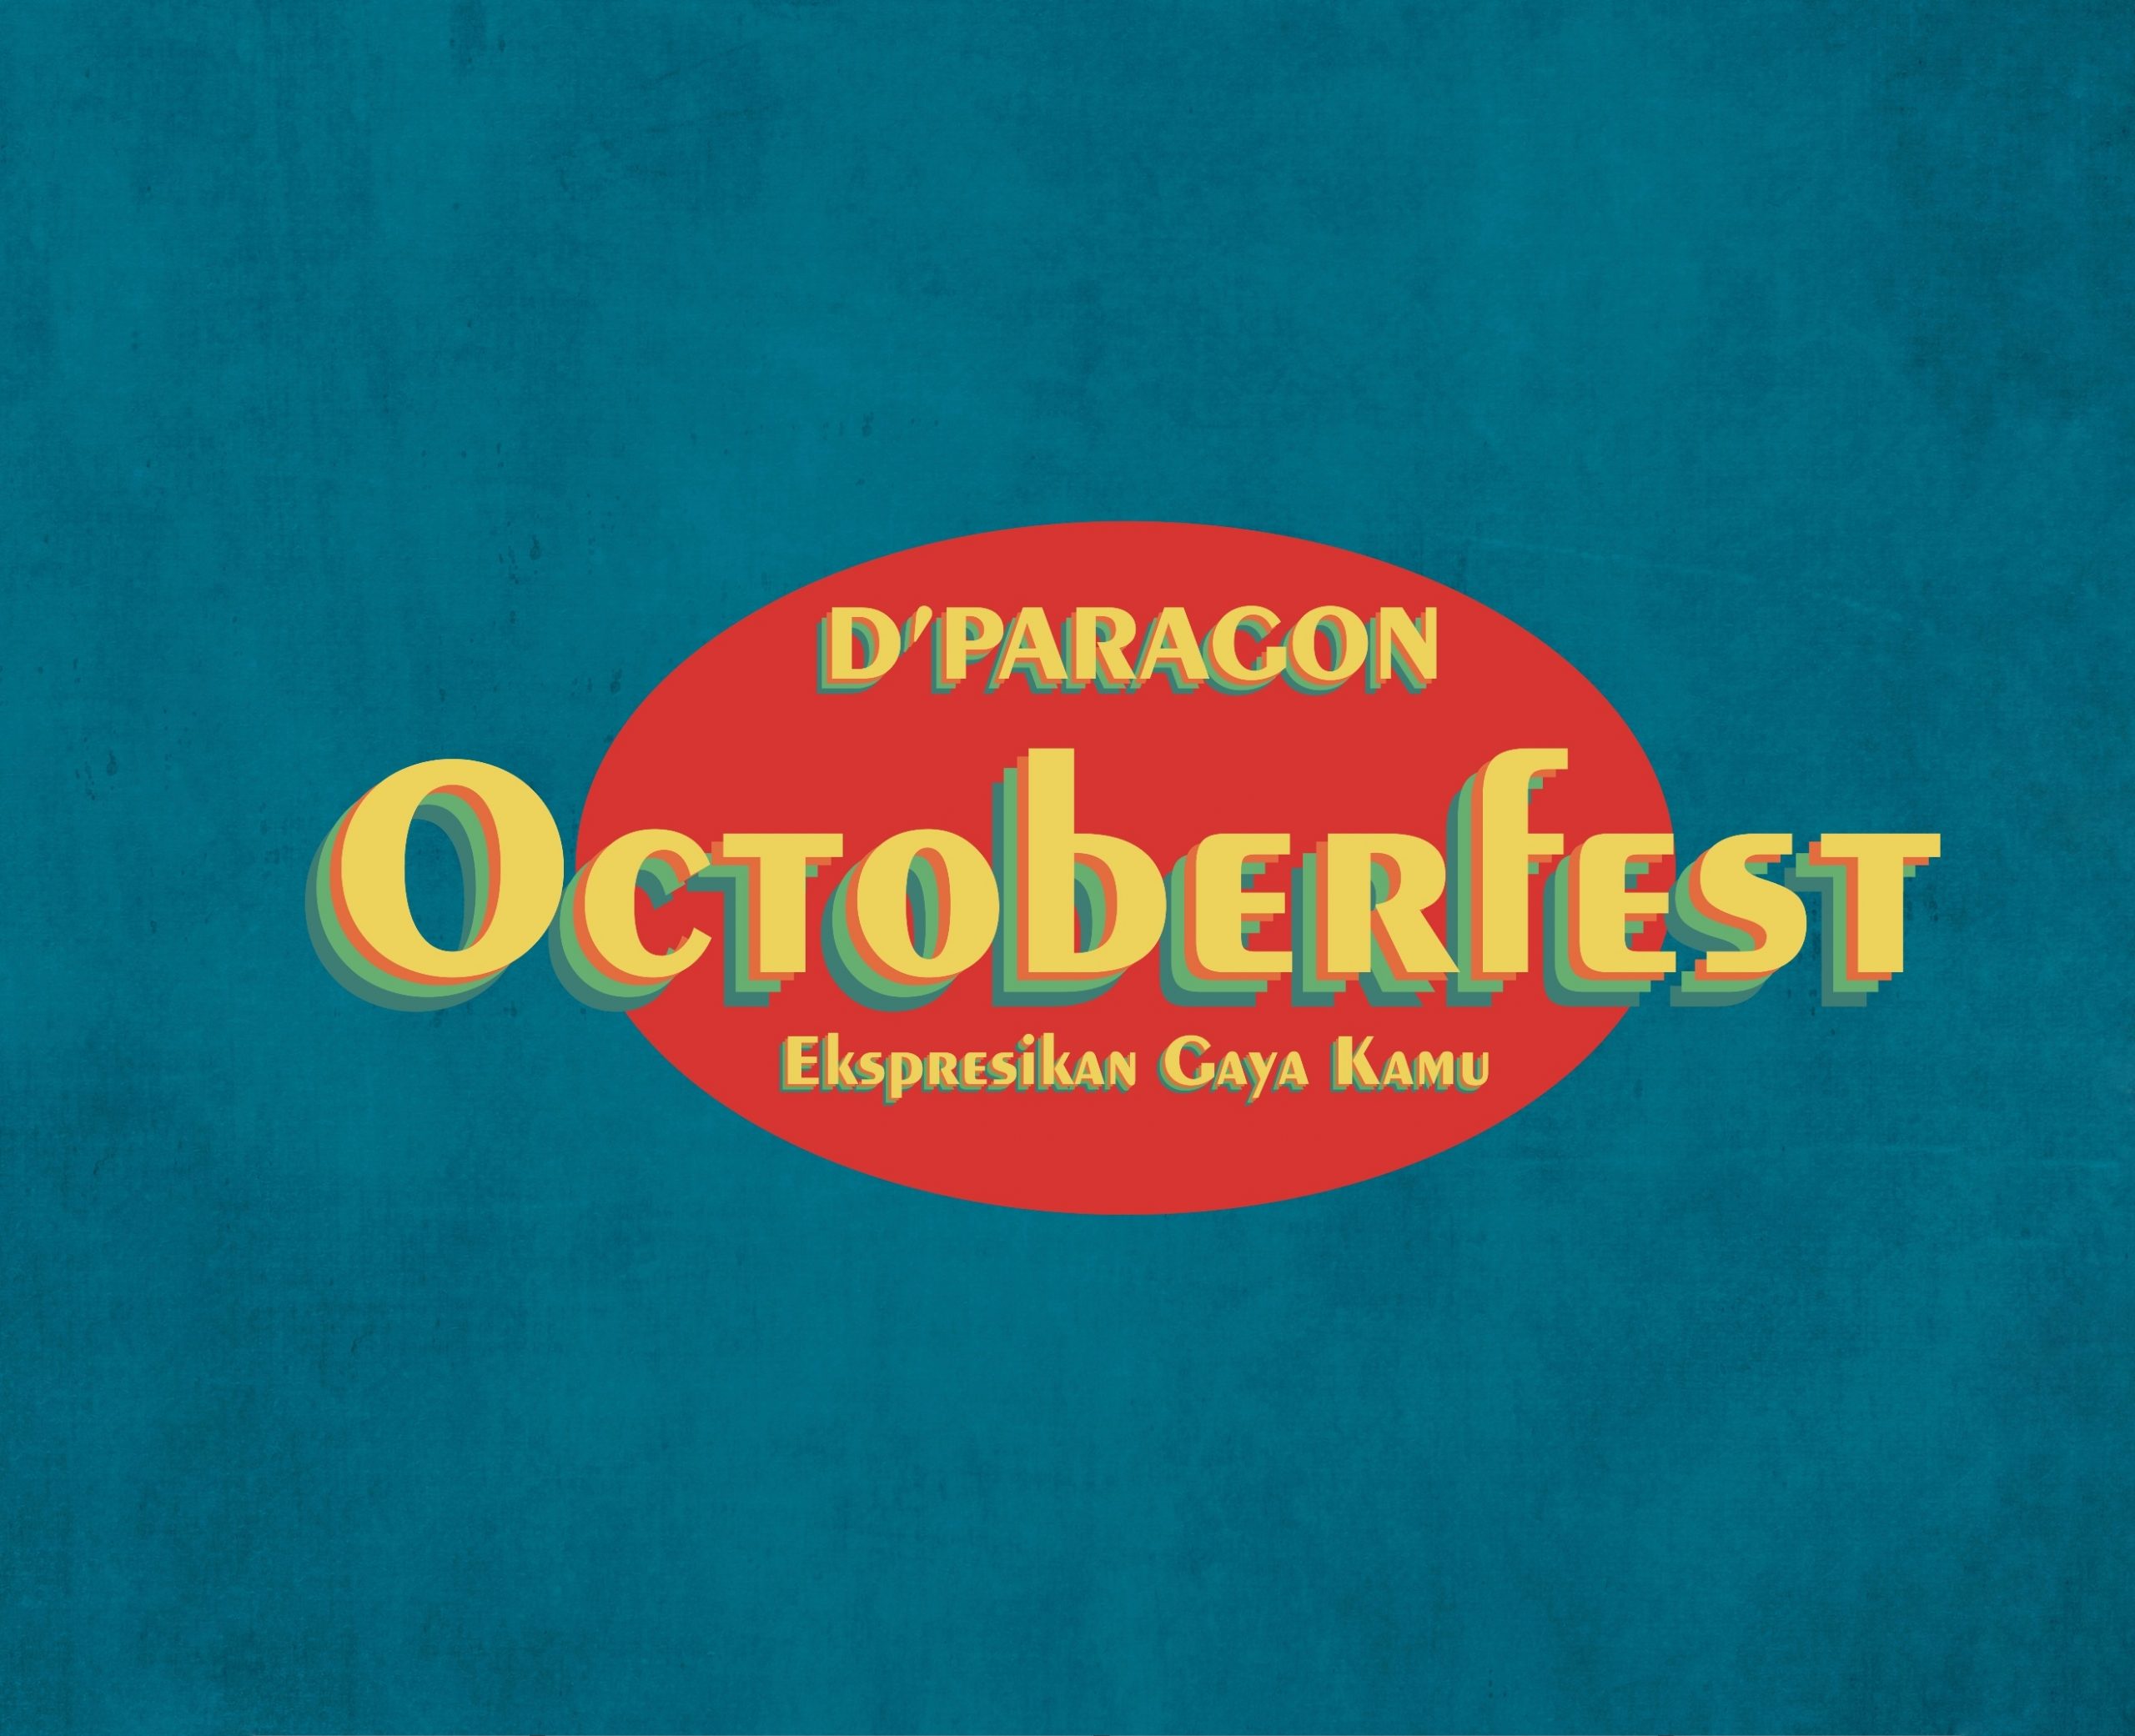 Octoberfest D'Paragon